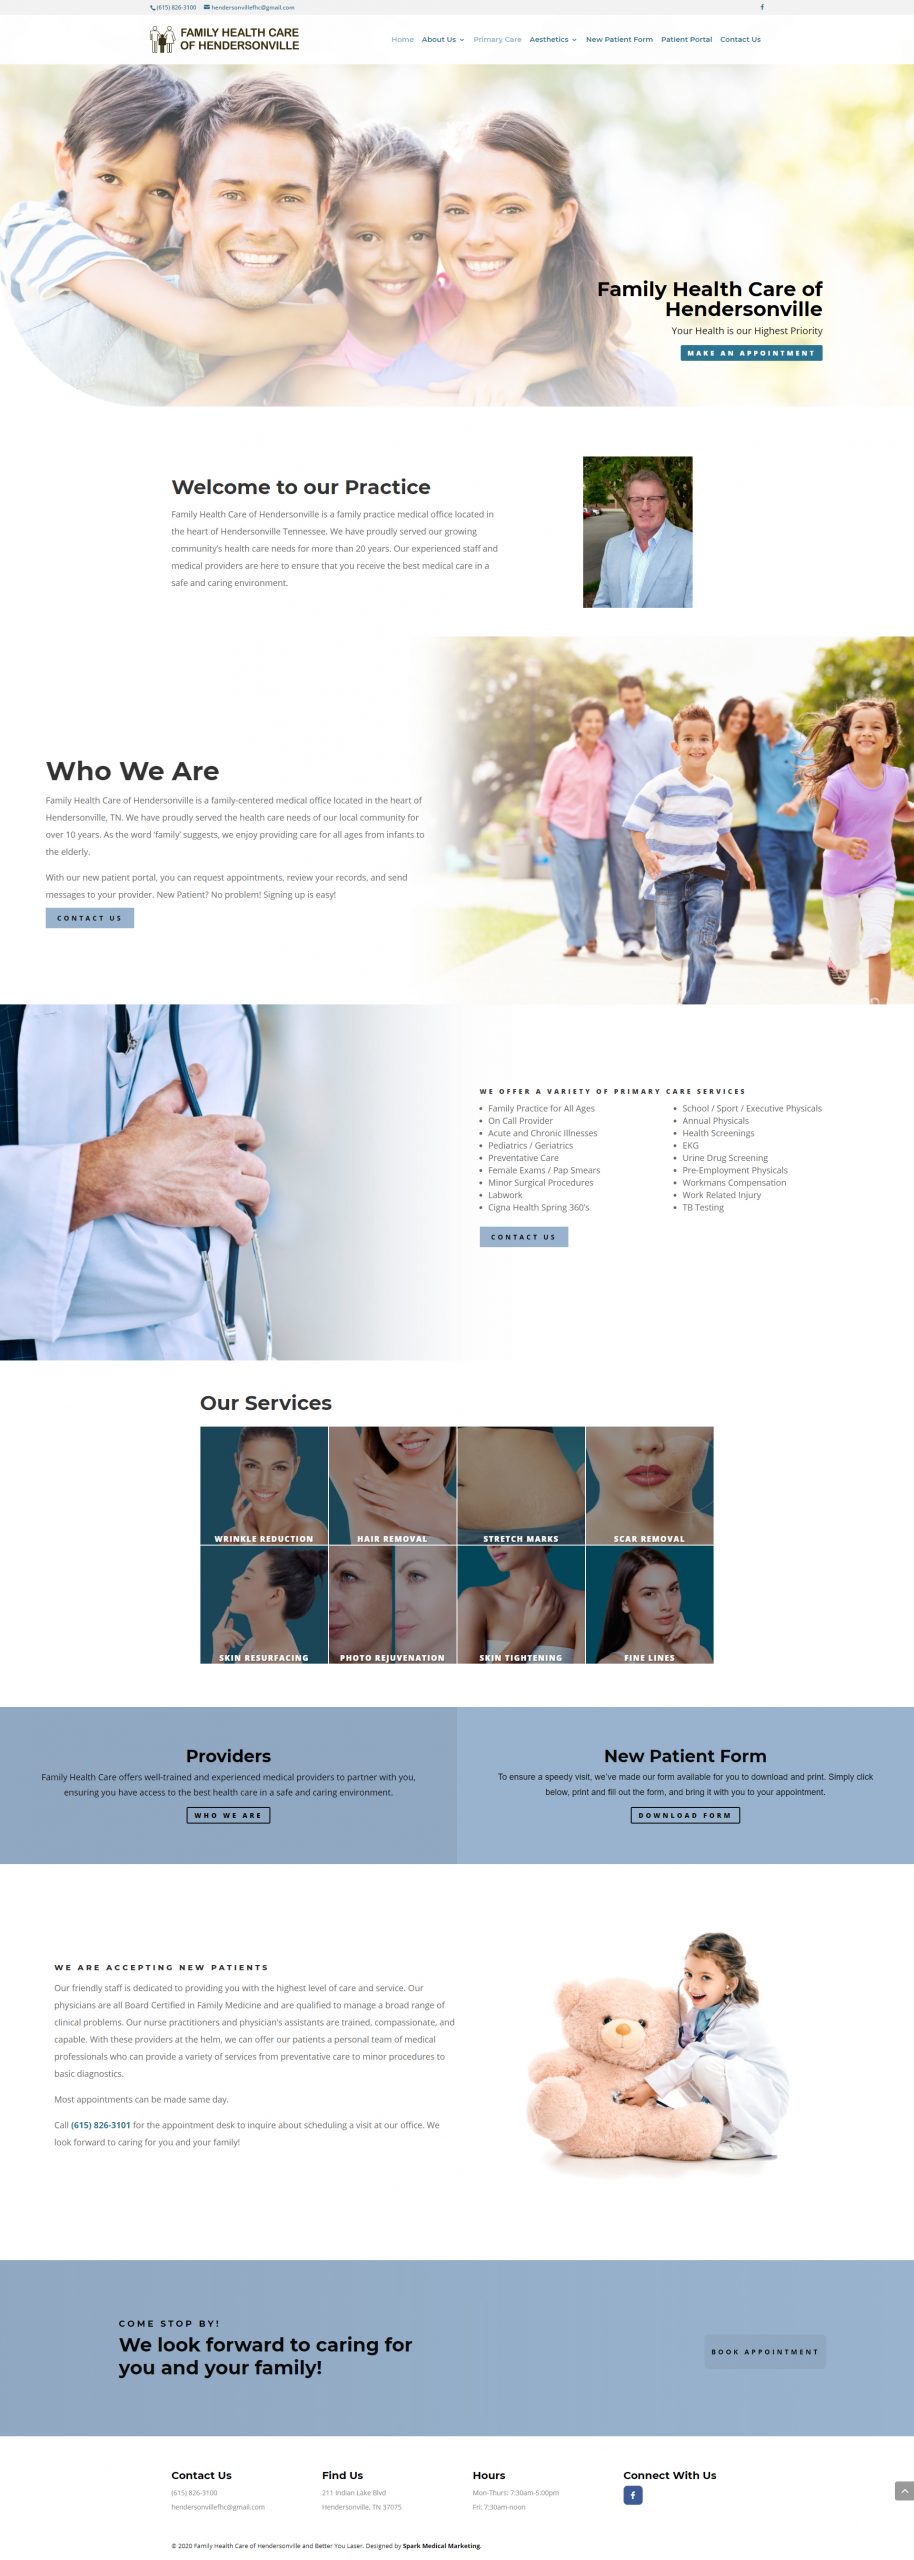 Family Health Care of Hendersonville Homepage